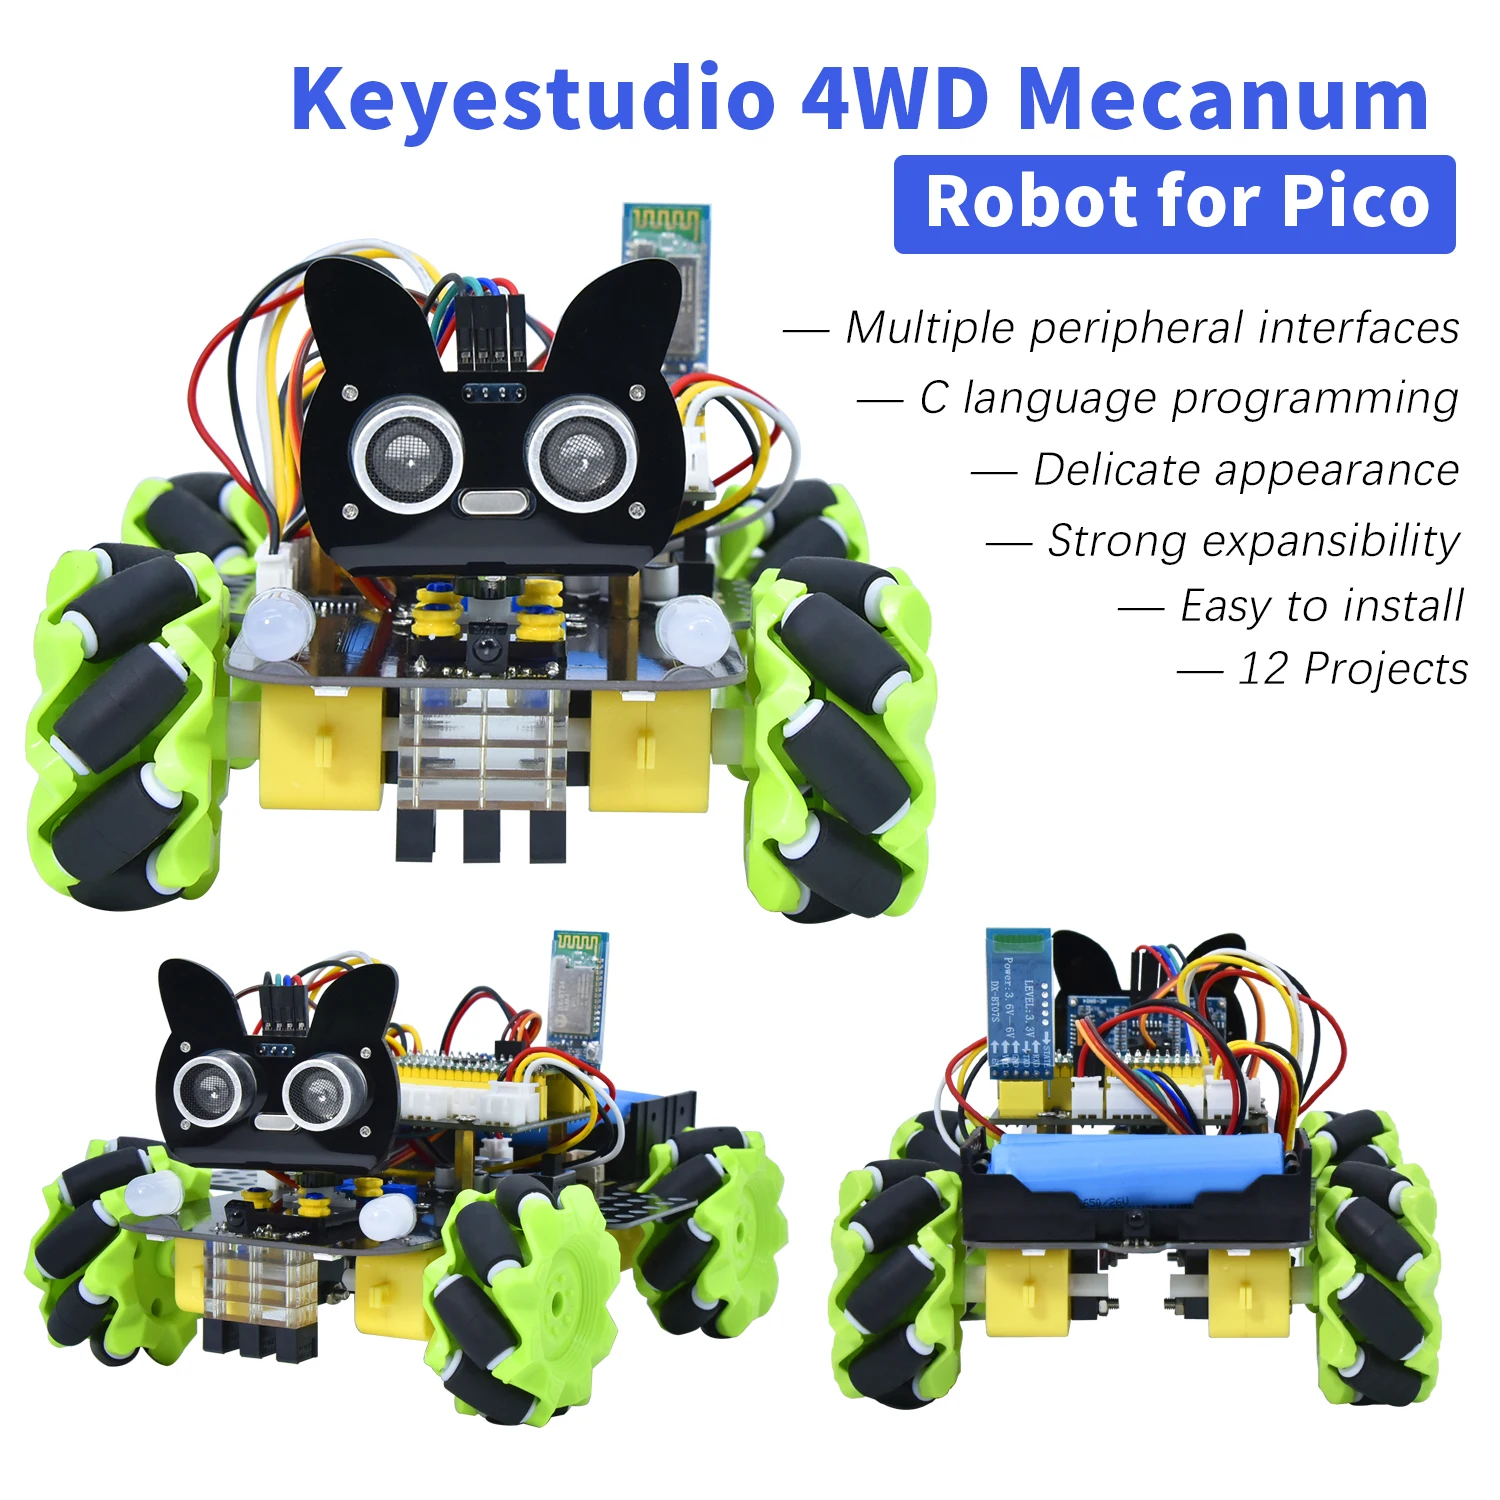 Keyestudio 4WD Mecanum Robot Raspberry Pi Pico Starter Kit For Raspberry Pi Pico Support Python&Arduino Programming